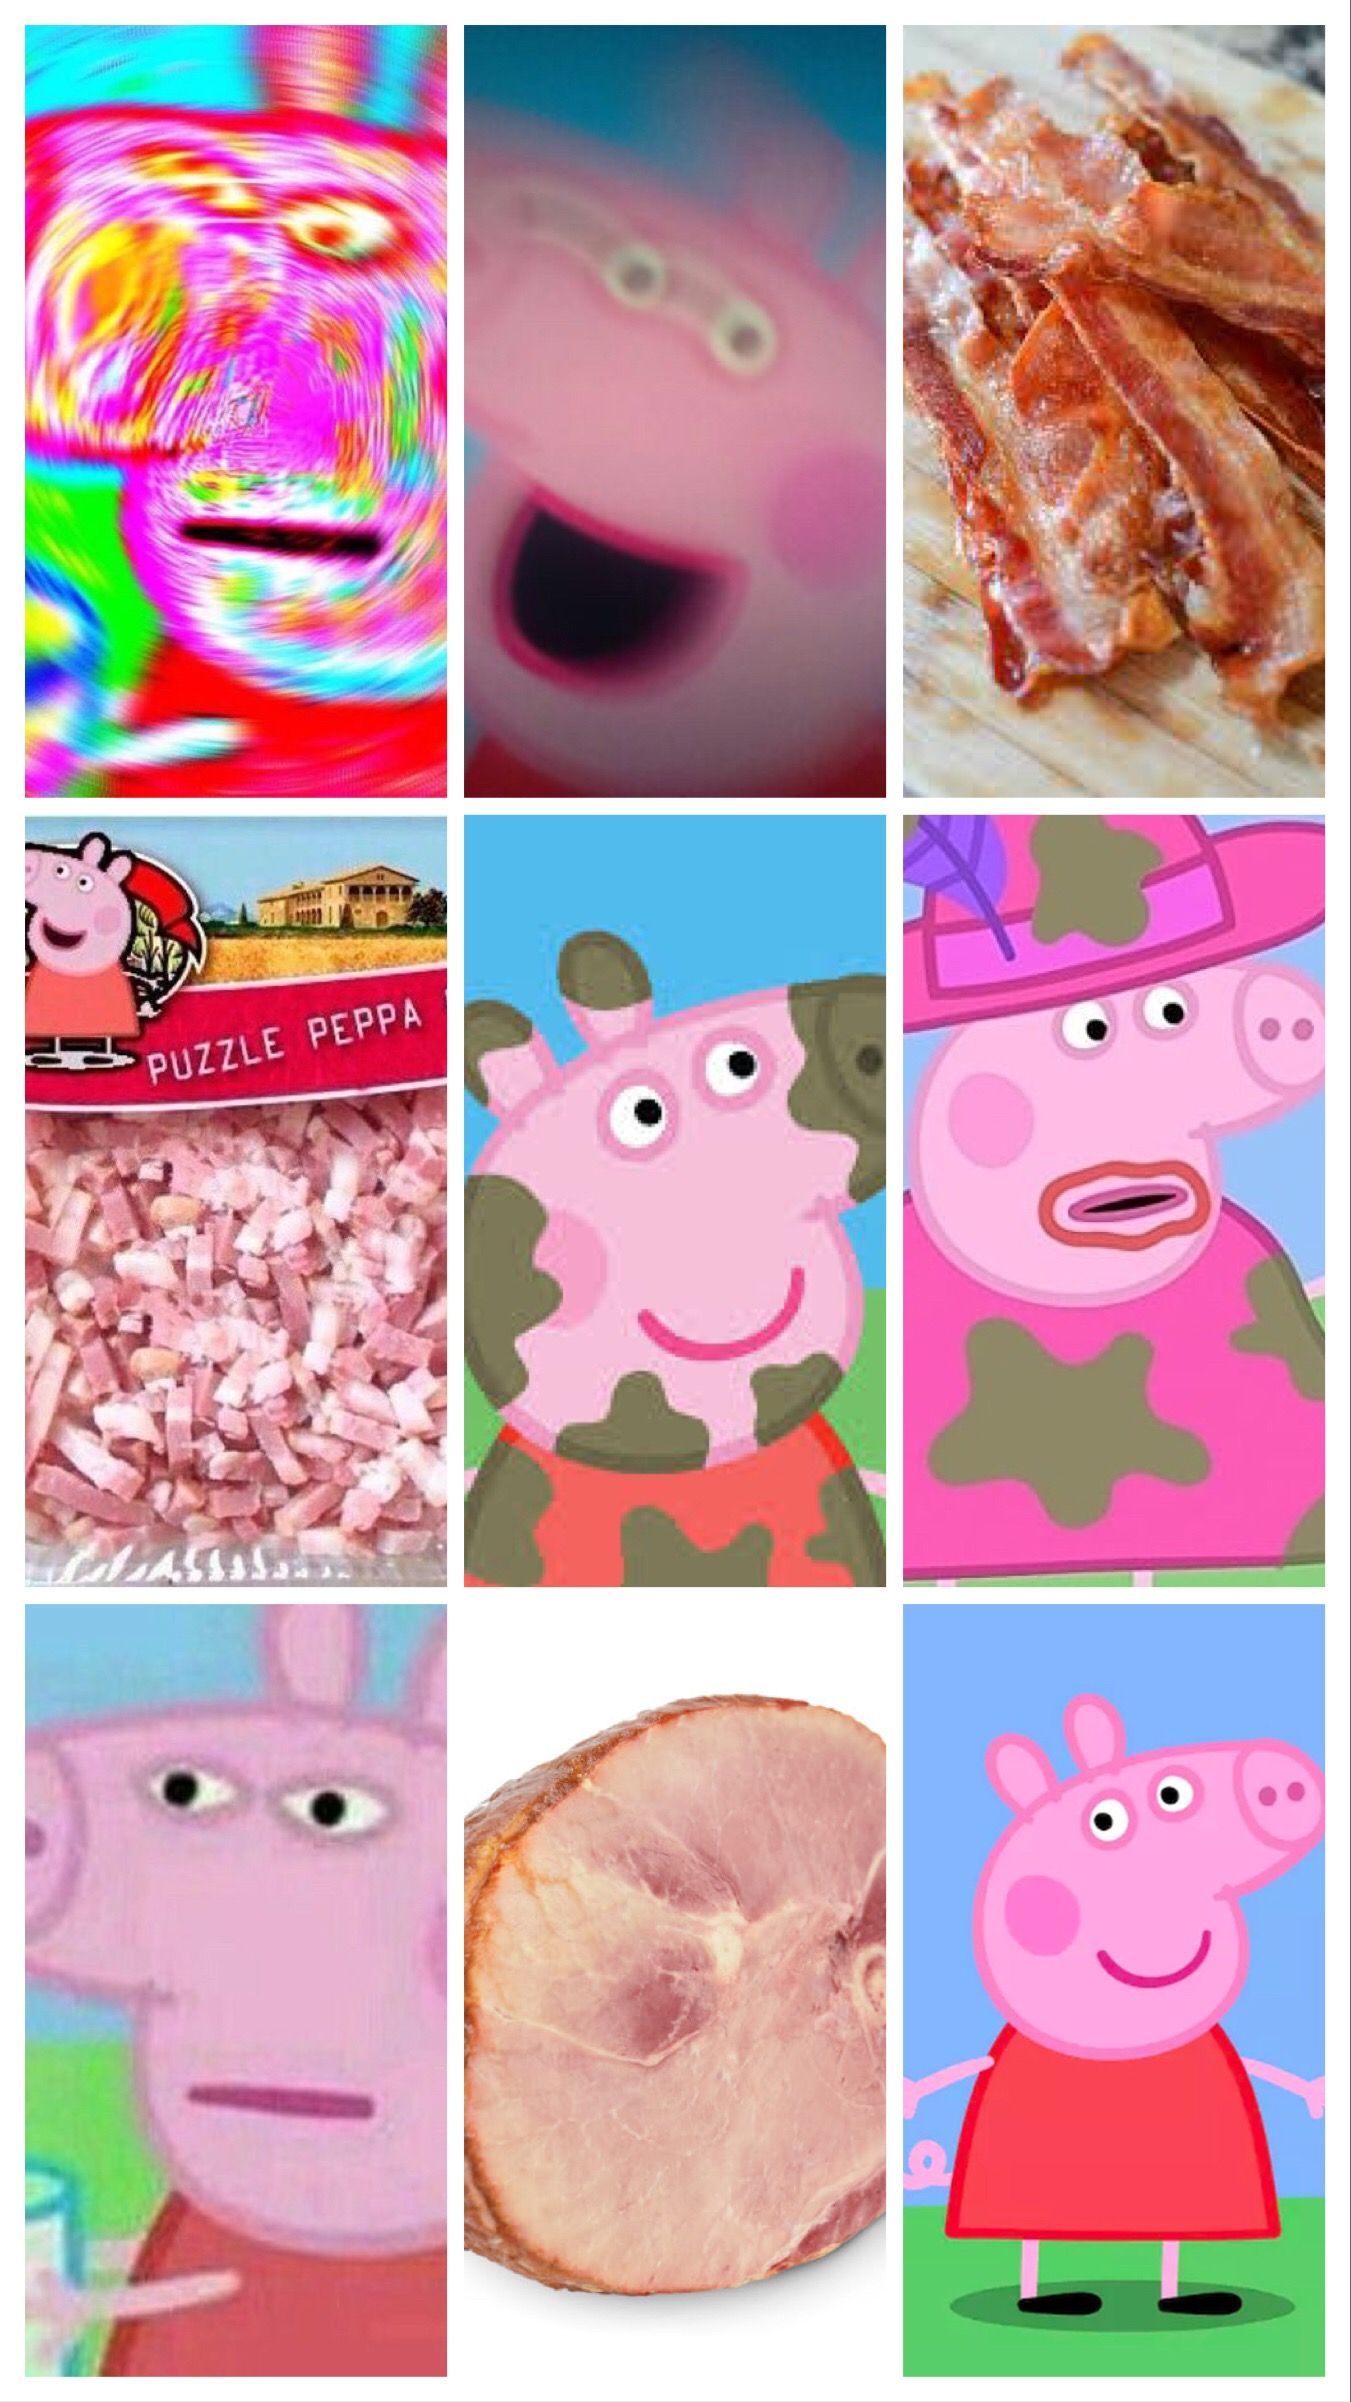 Peppa Pig is a popular cartoon show for kids. - Peppa Pig